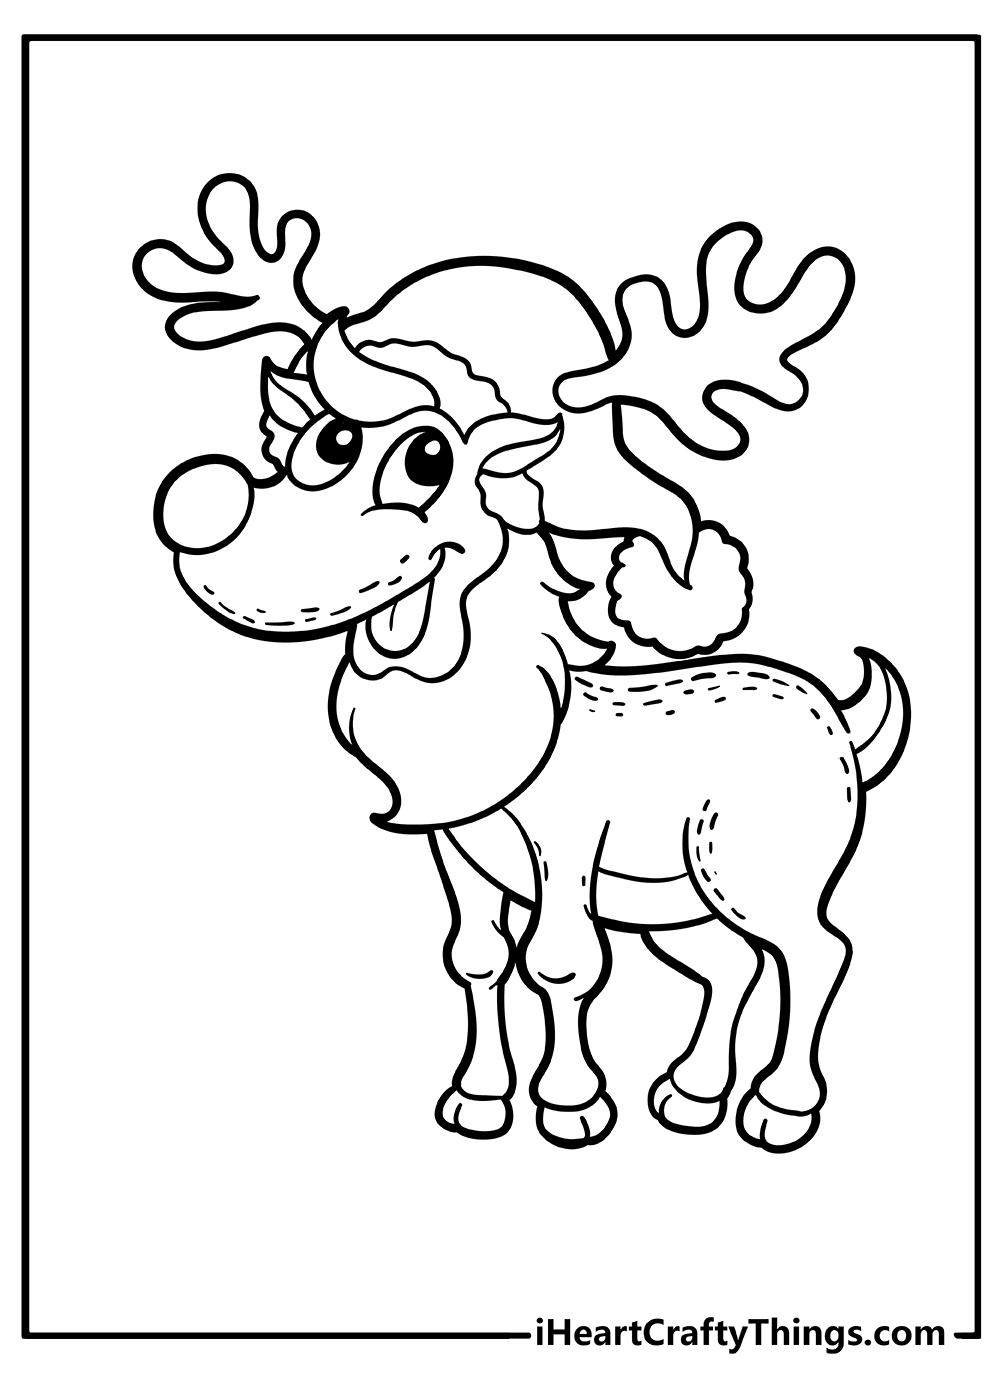 Reindeer Christmas Coloring Pages free printable